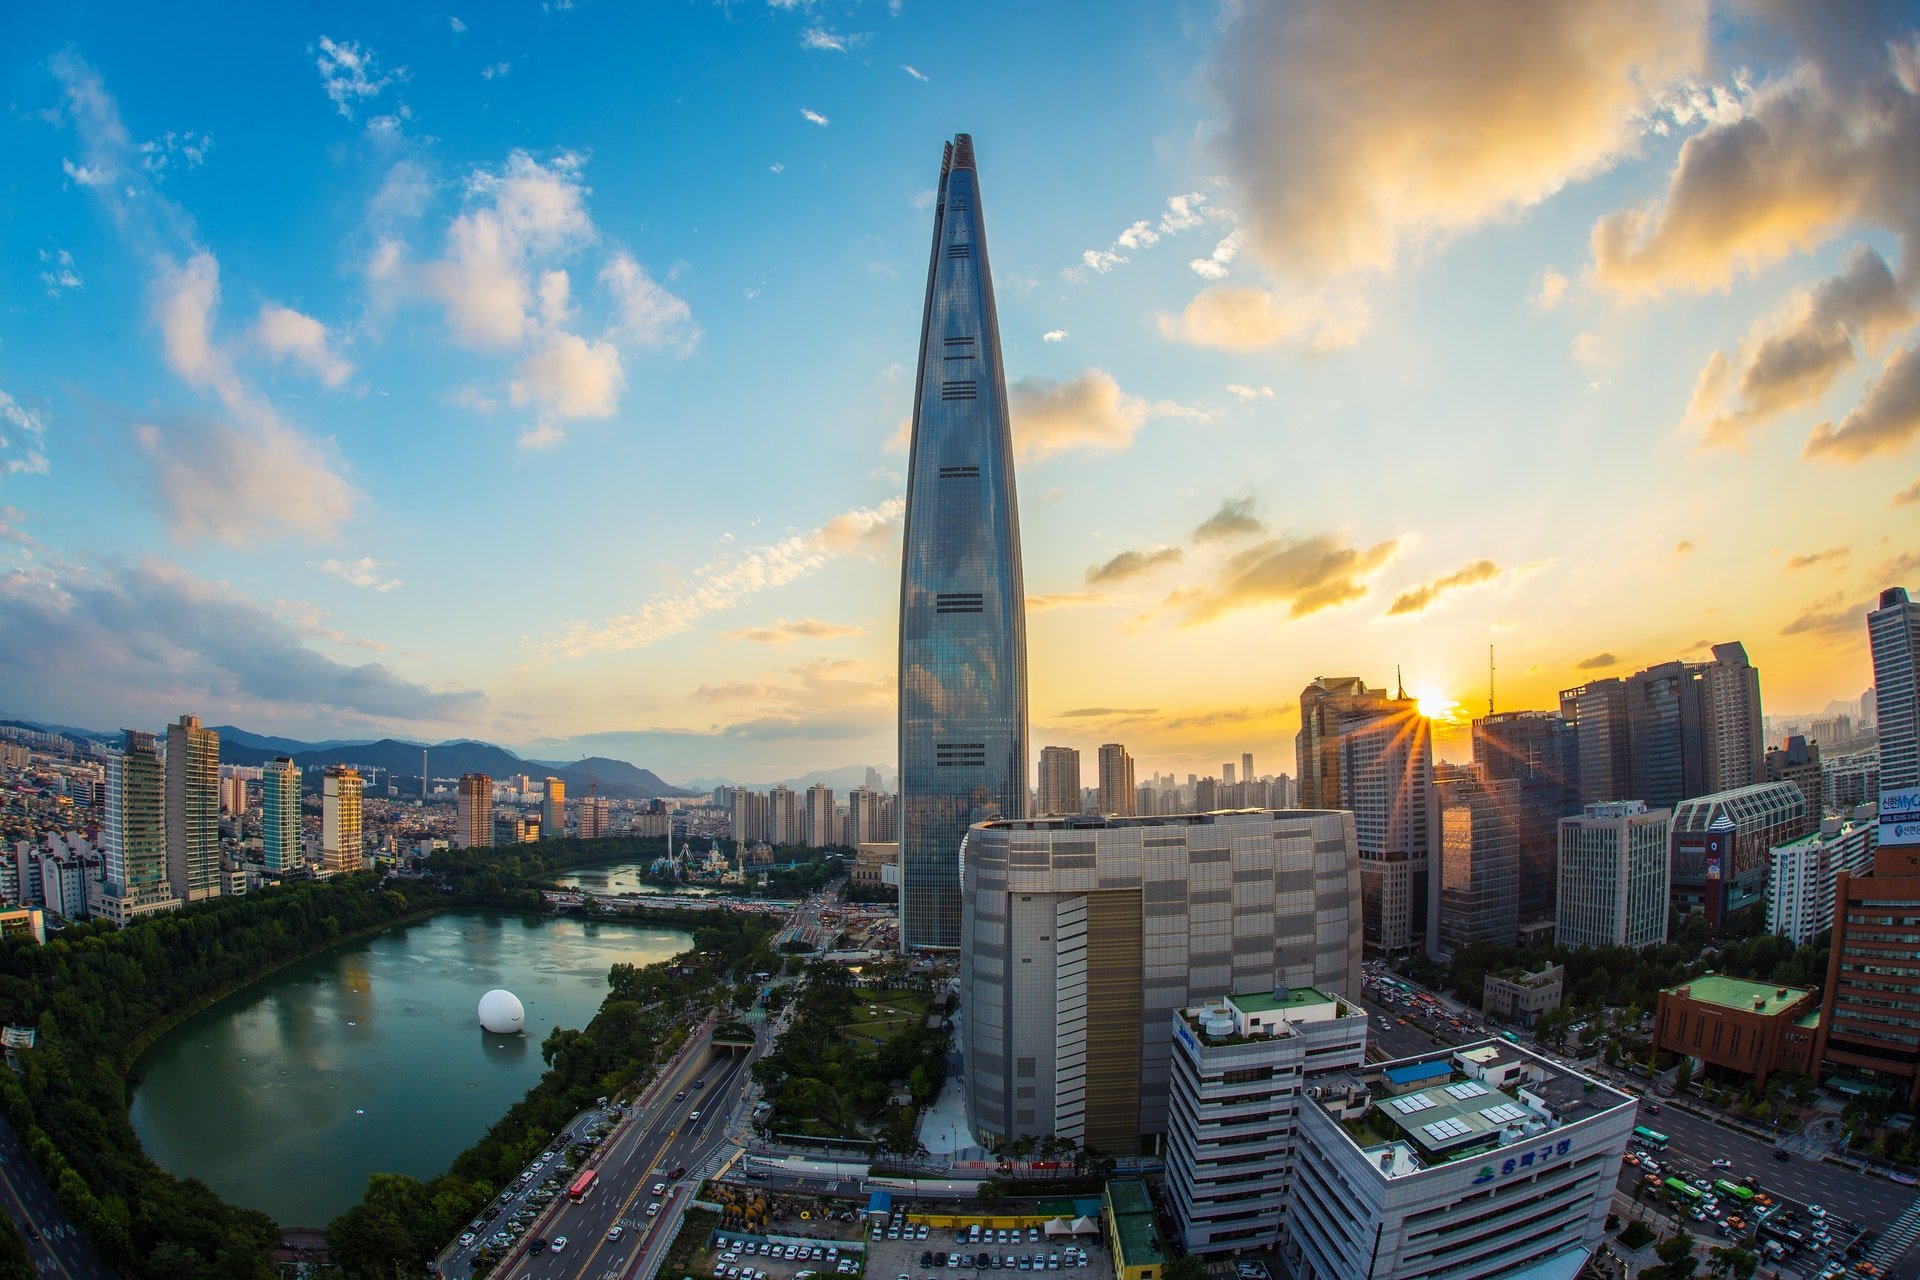 "Metaverse Seoul": Korea's Capital Becomes a Super Smart City